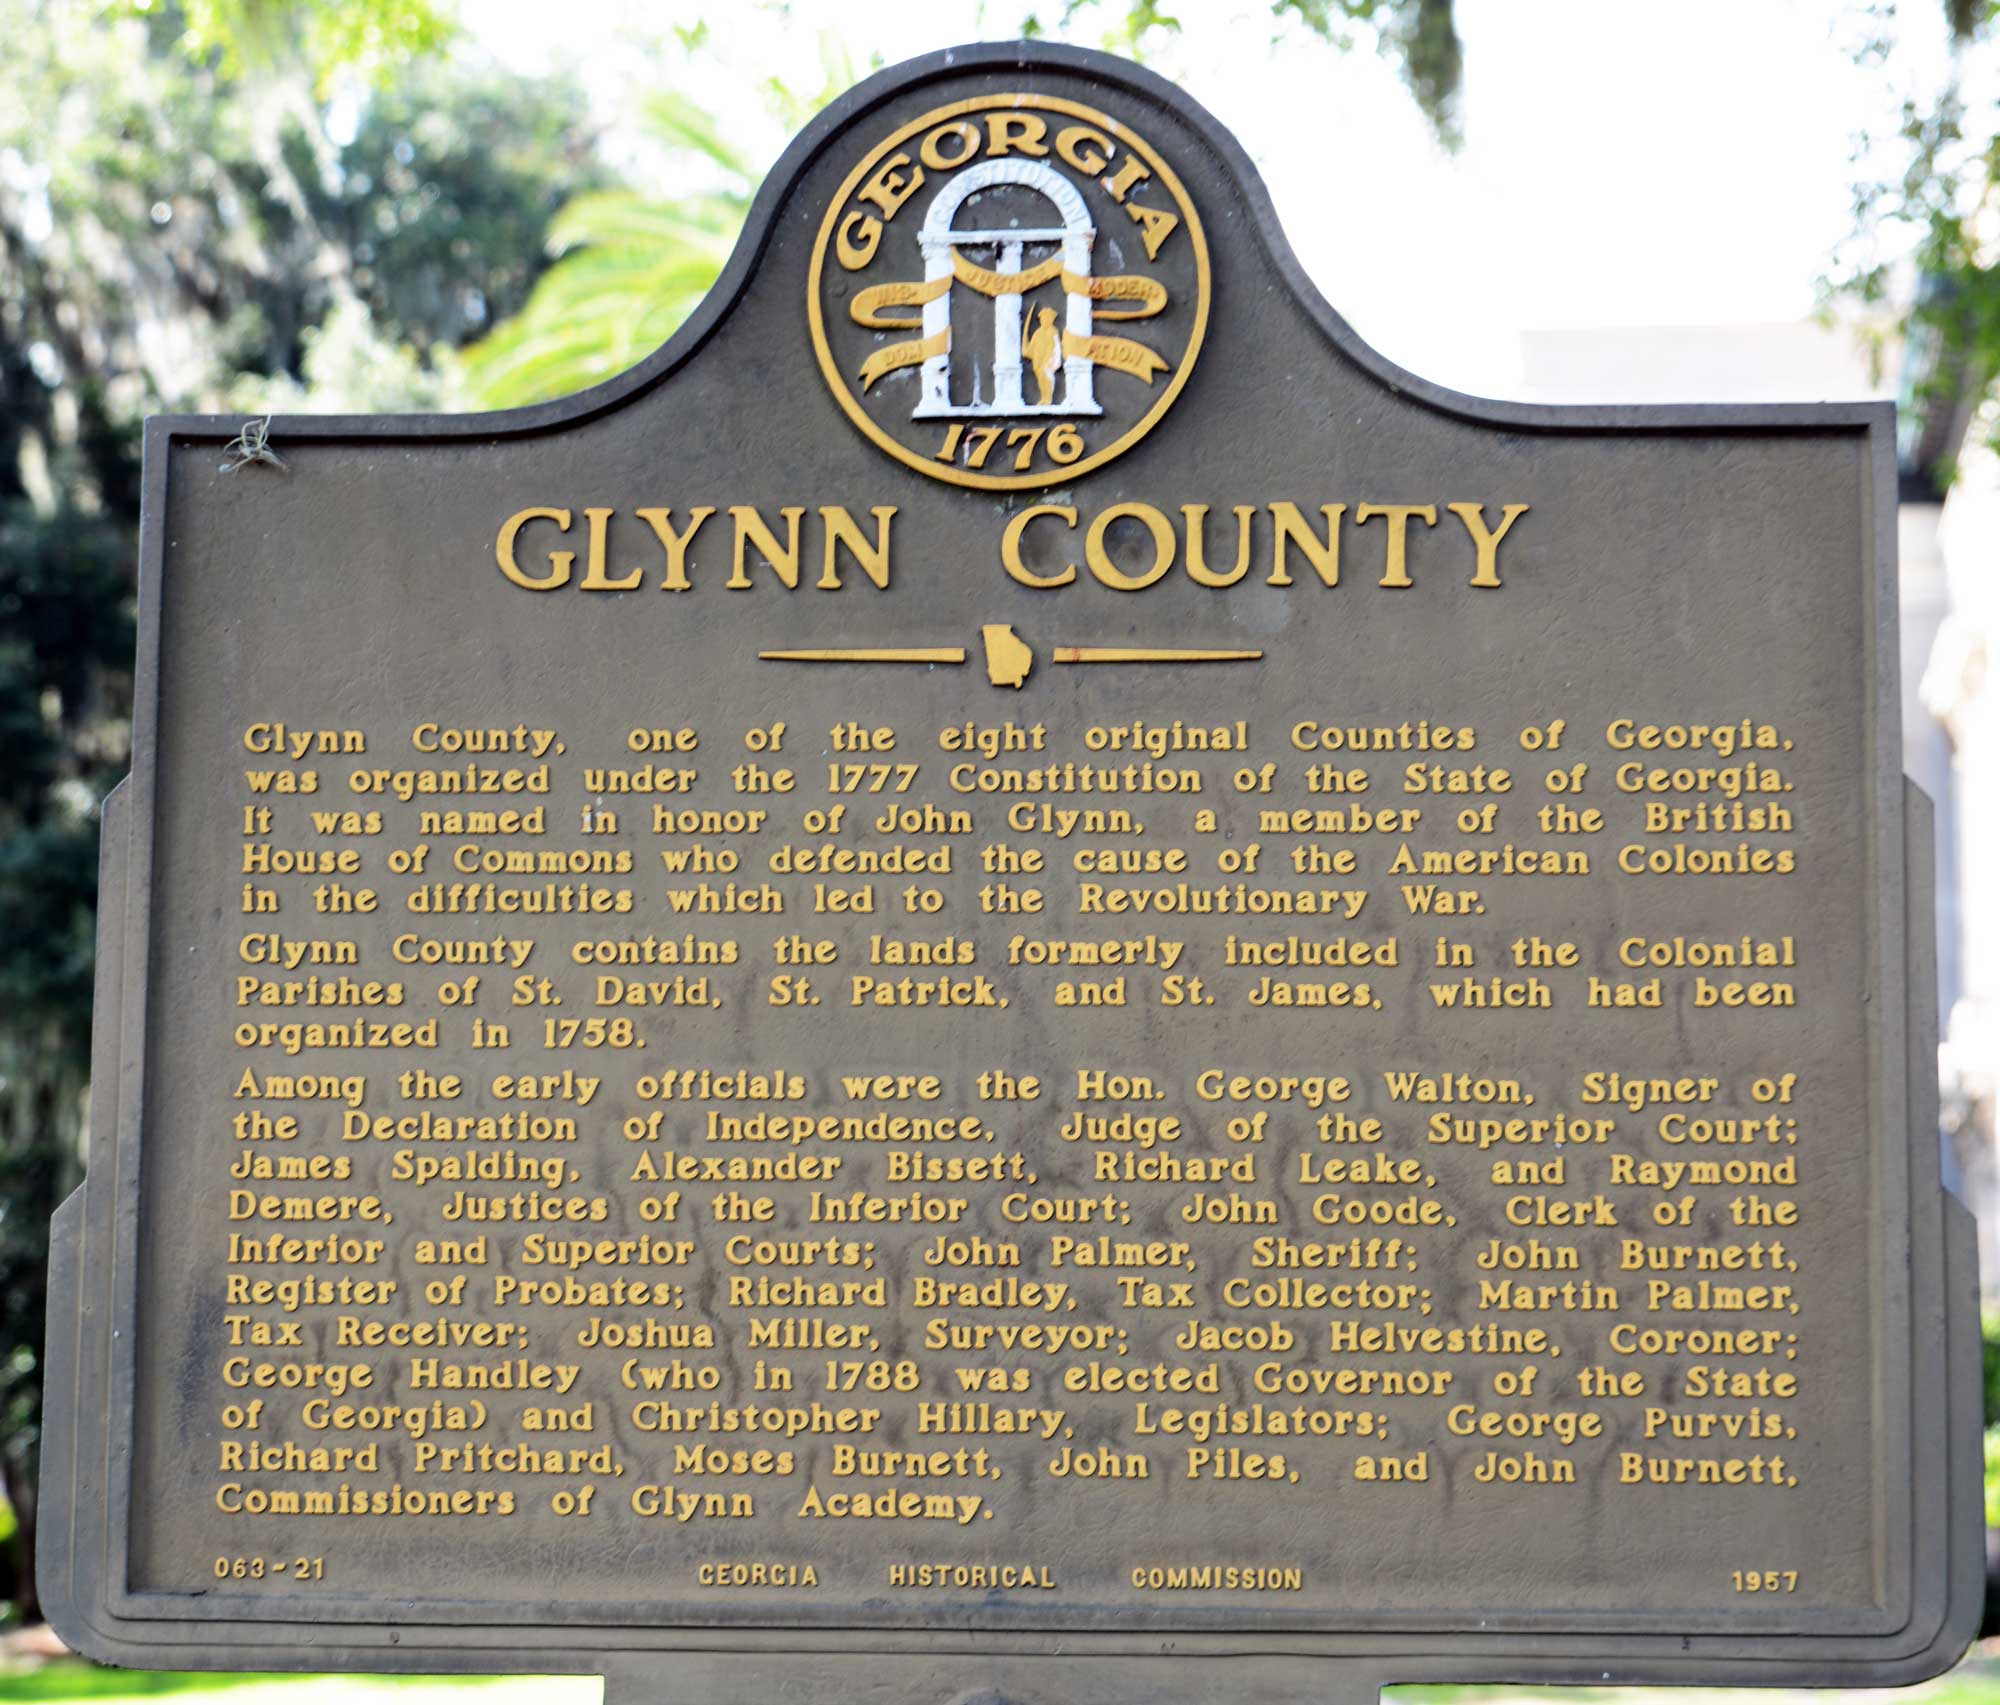 Historical marker in Glynn County Georgia